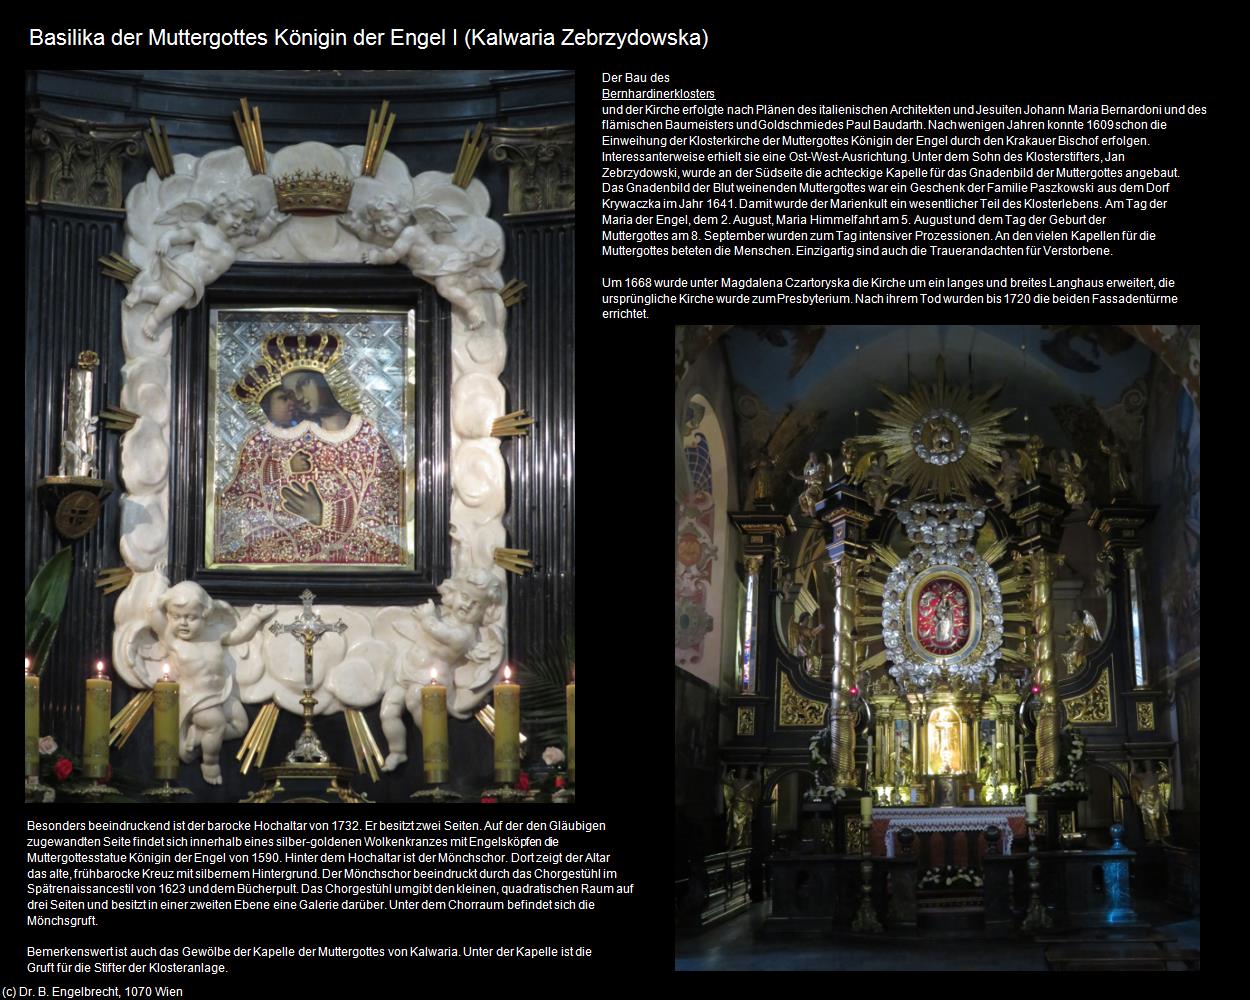 Basilika der Muttergottes Königin der Engel I (Kalwaria Zebrzydowska) in POLEN-Galizien(c)B.Engelbrecht